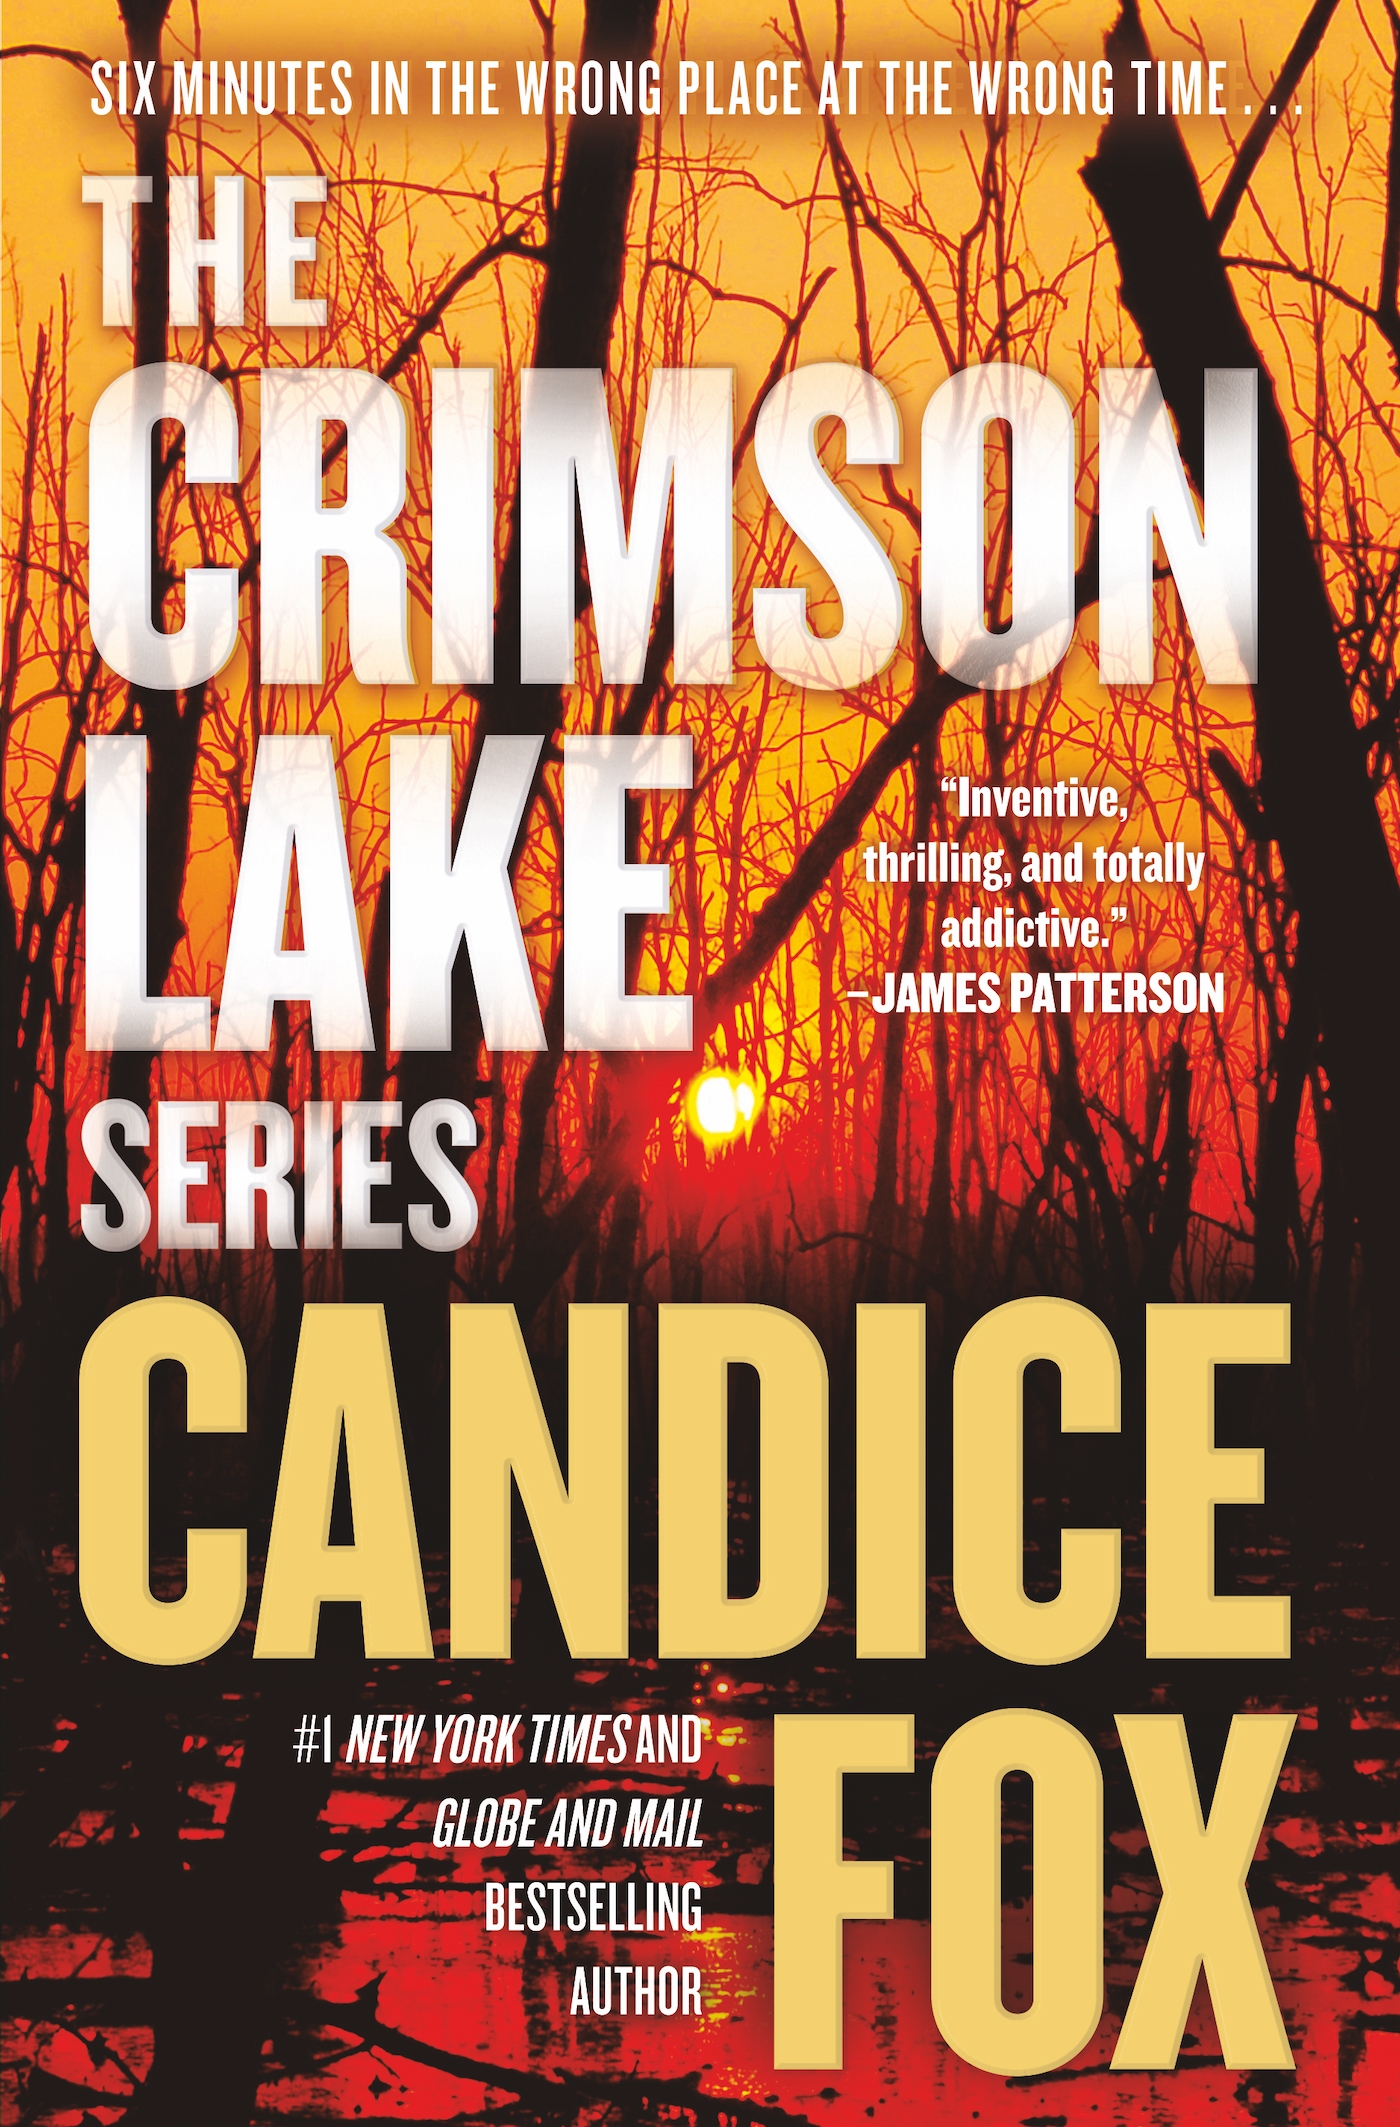 The Crimson Lake Series by Candice Fox